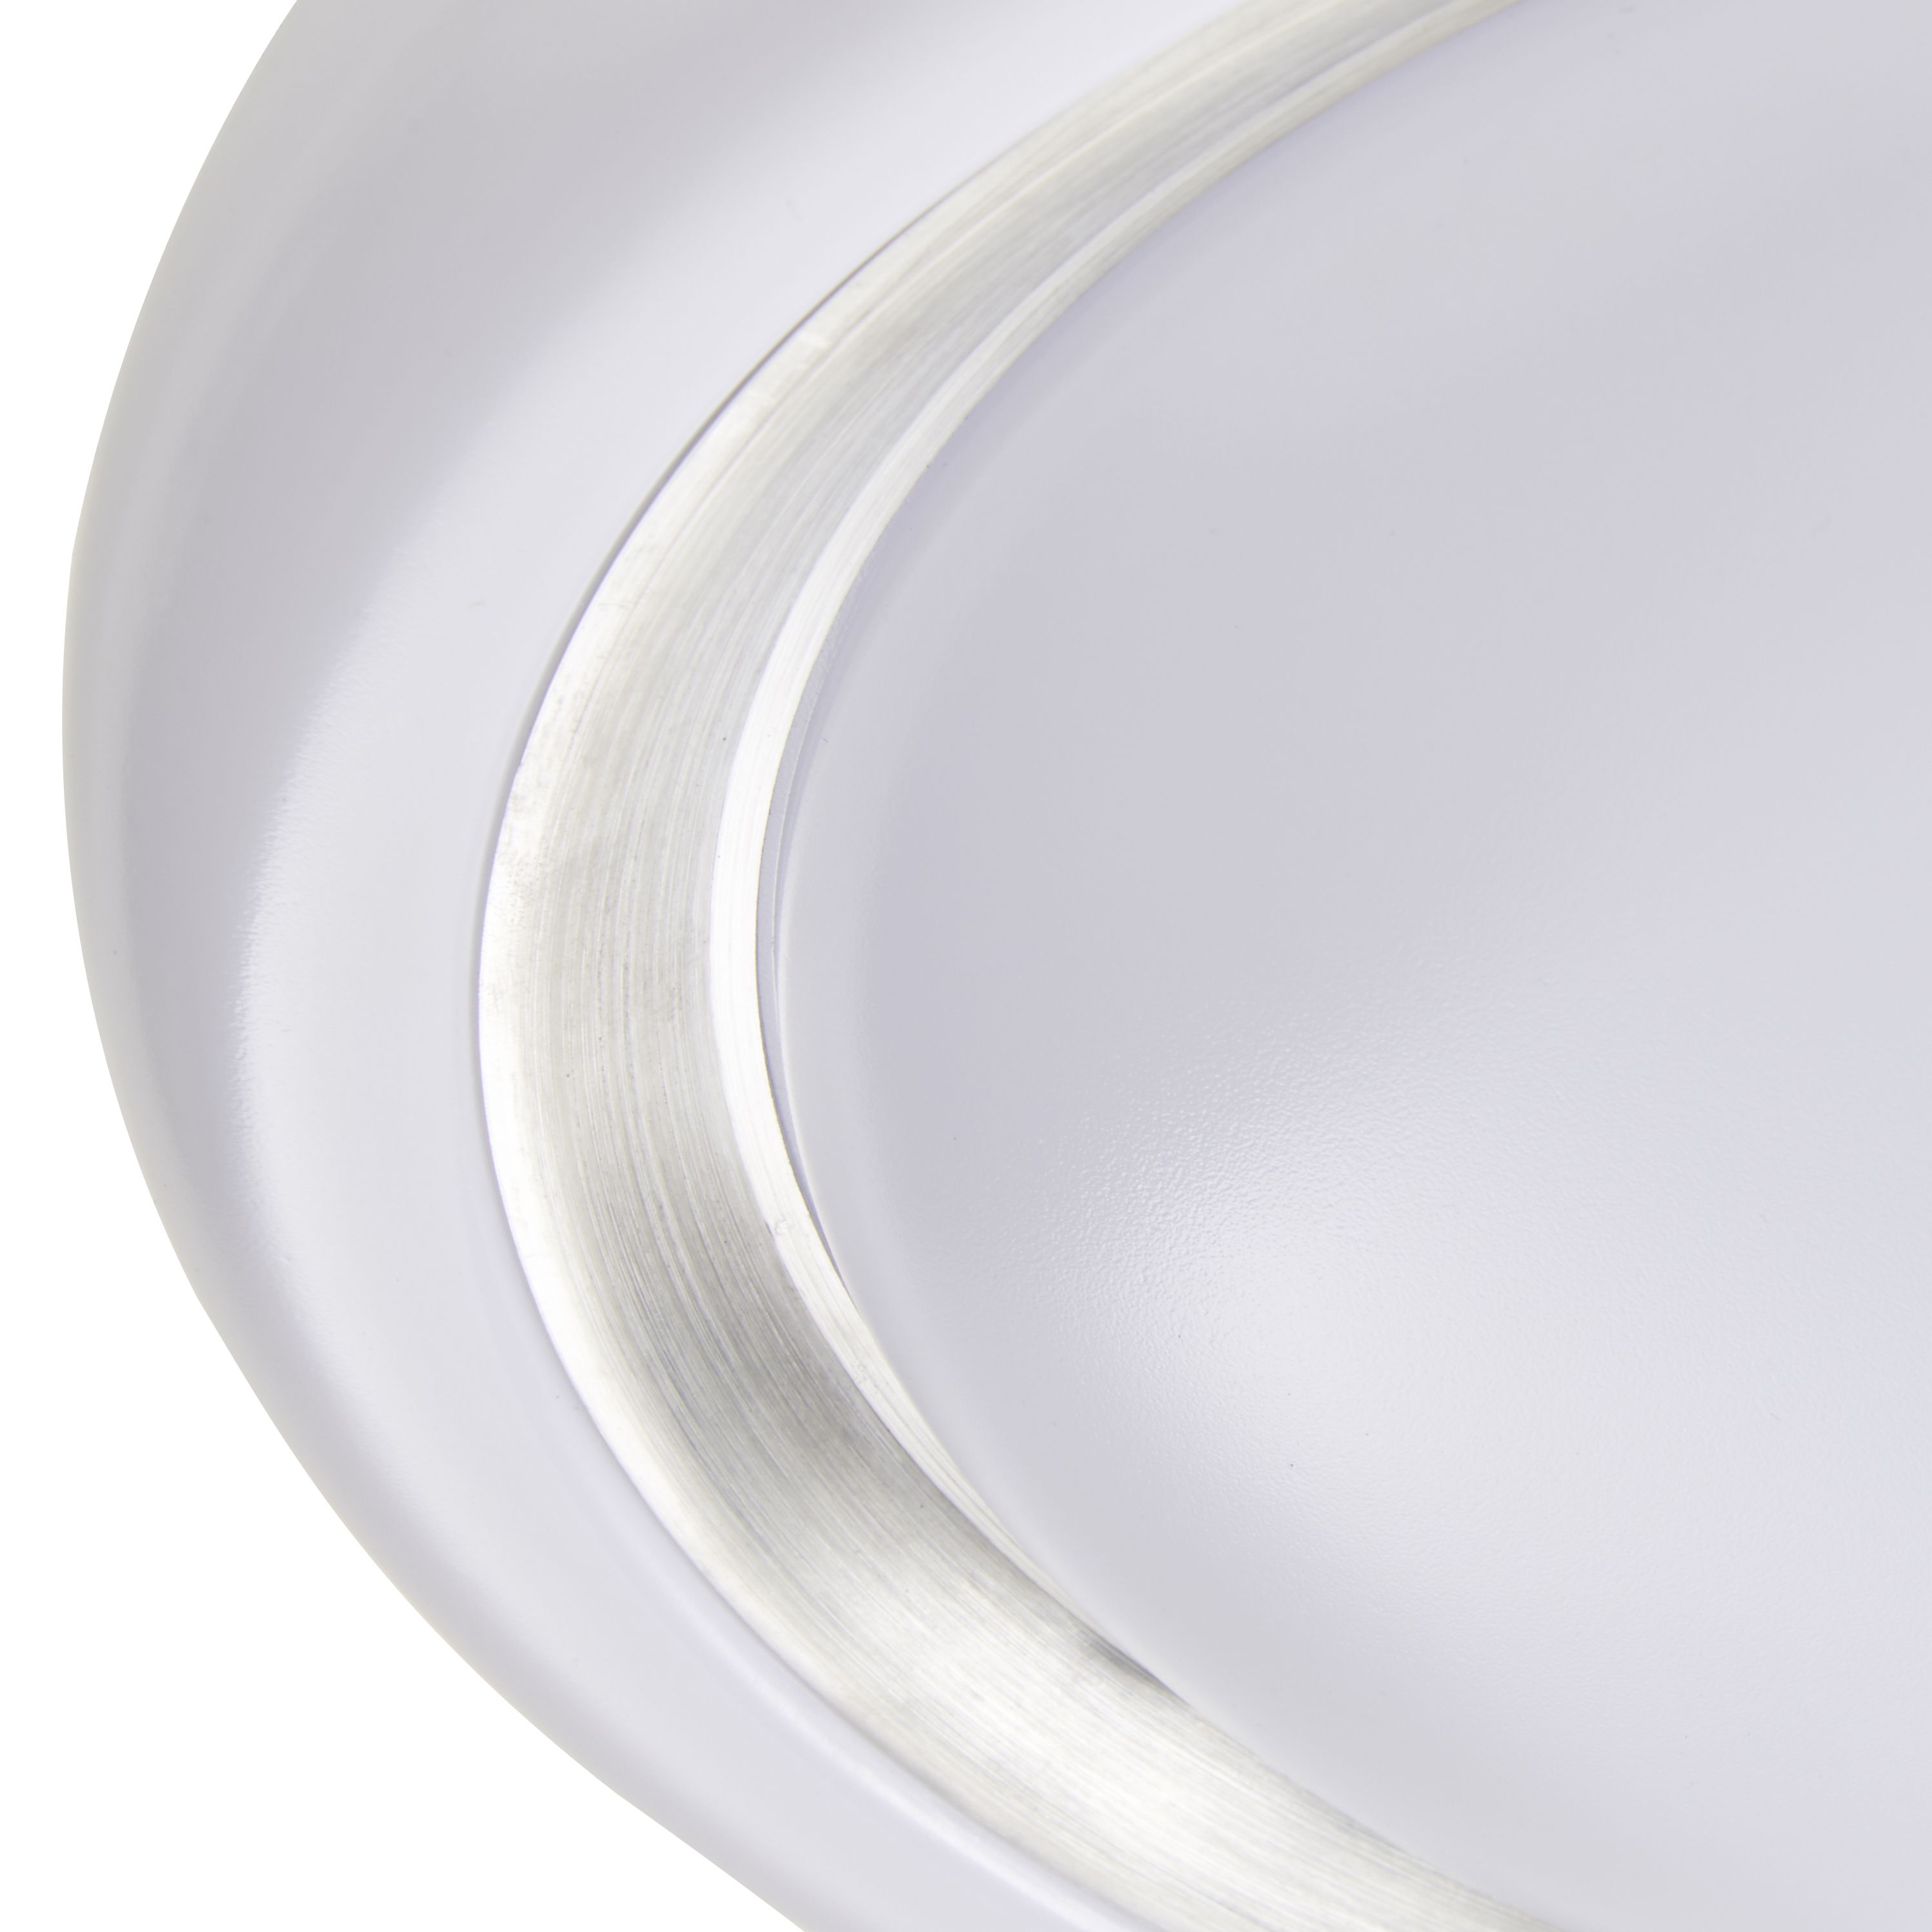 Iris Round Brushed Metal & plastic White LED Ceiling light